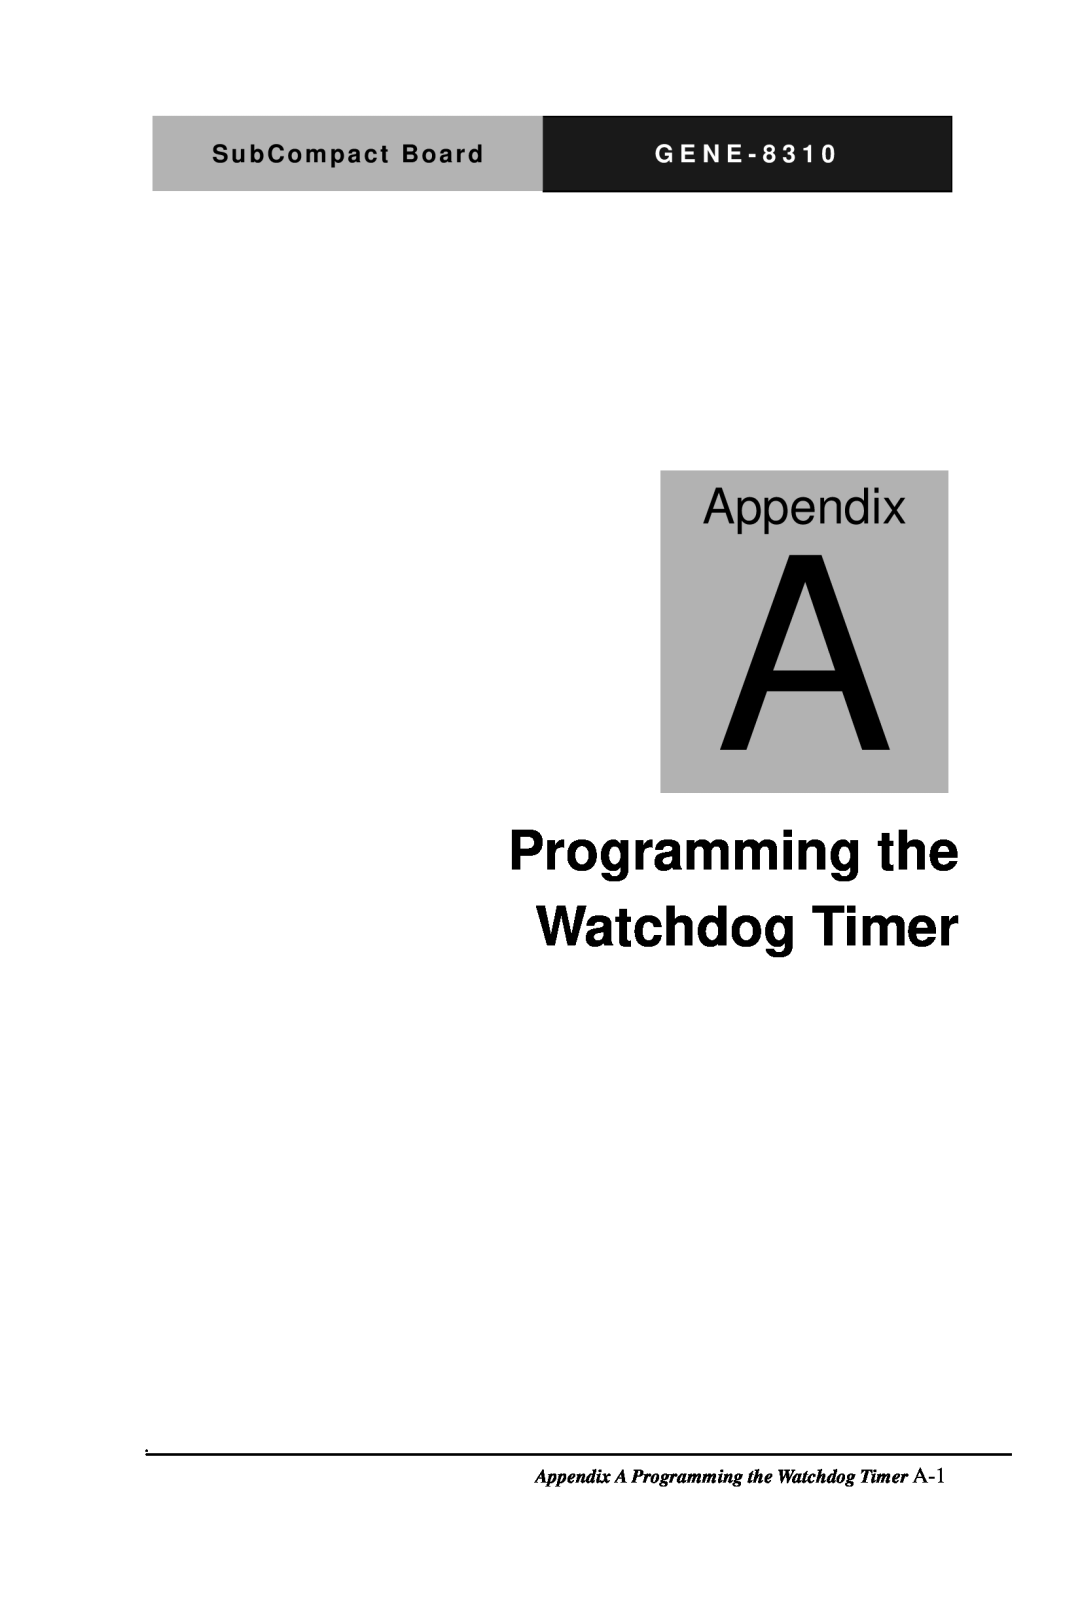 Intel GENE-8310 manual Programming the Watchdog Timer, Appendix, SubCompact Board, G E N E - 8 3 1 